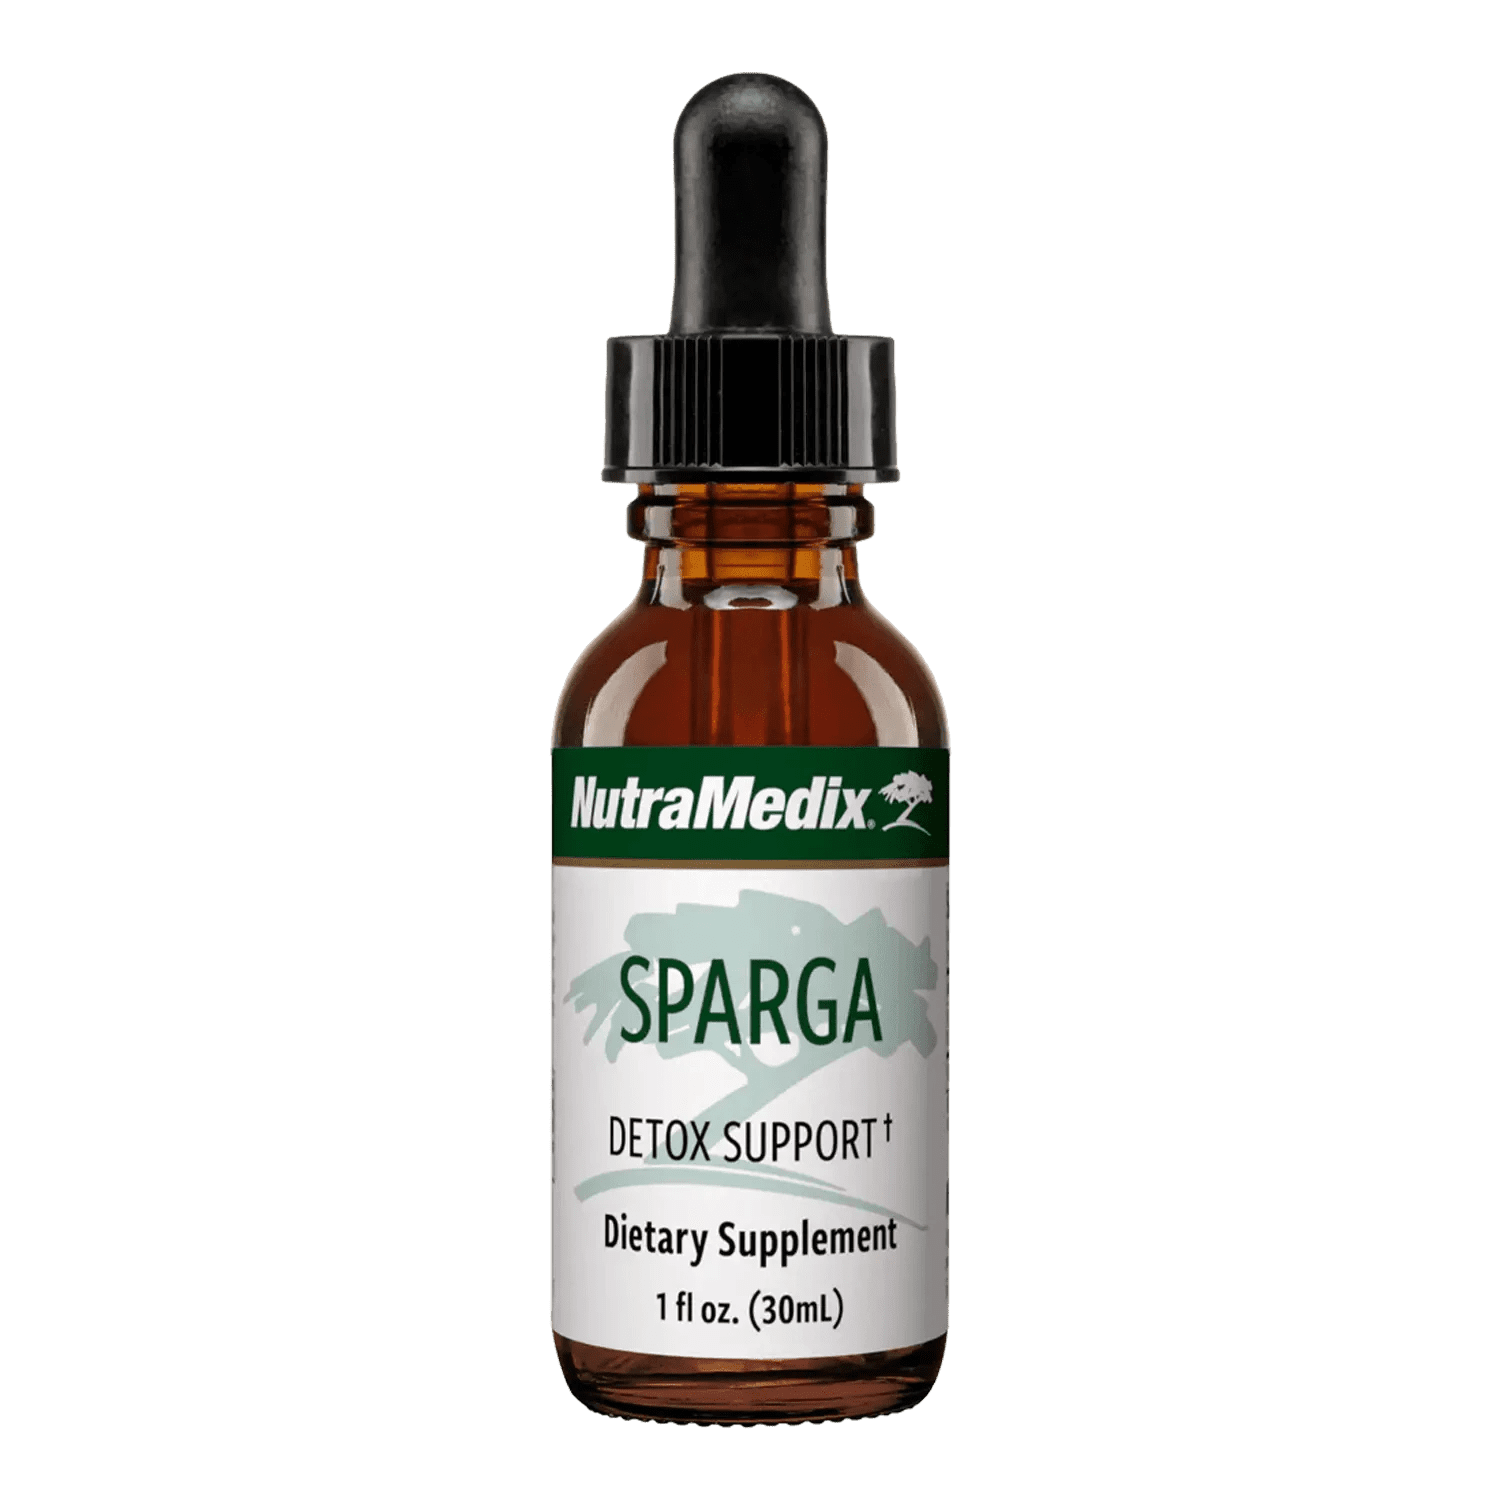 Sparga liquid supplement for detox support